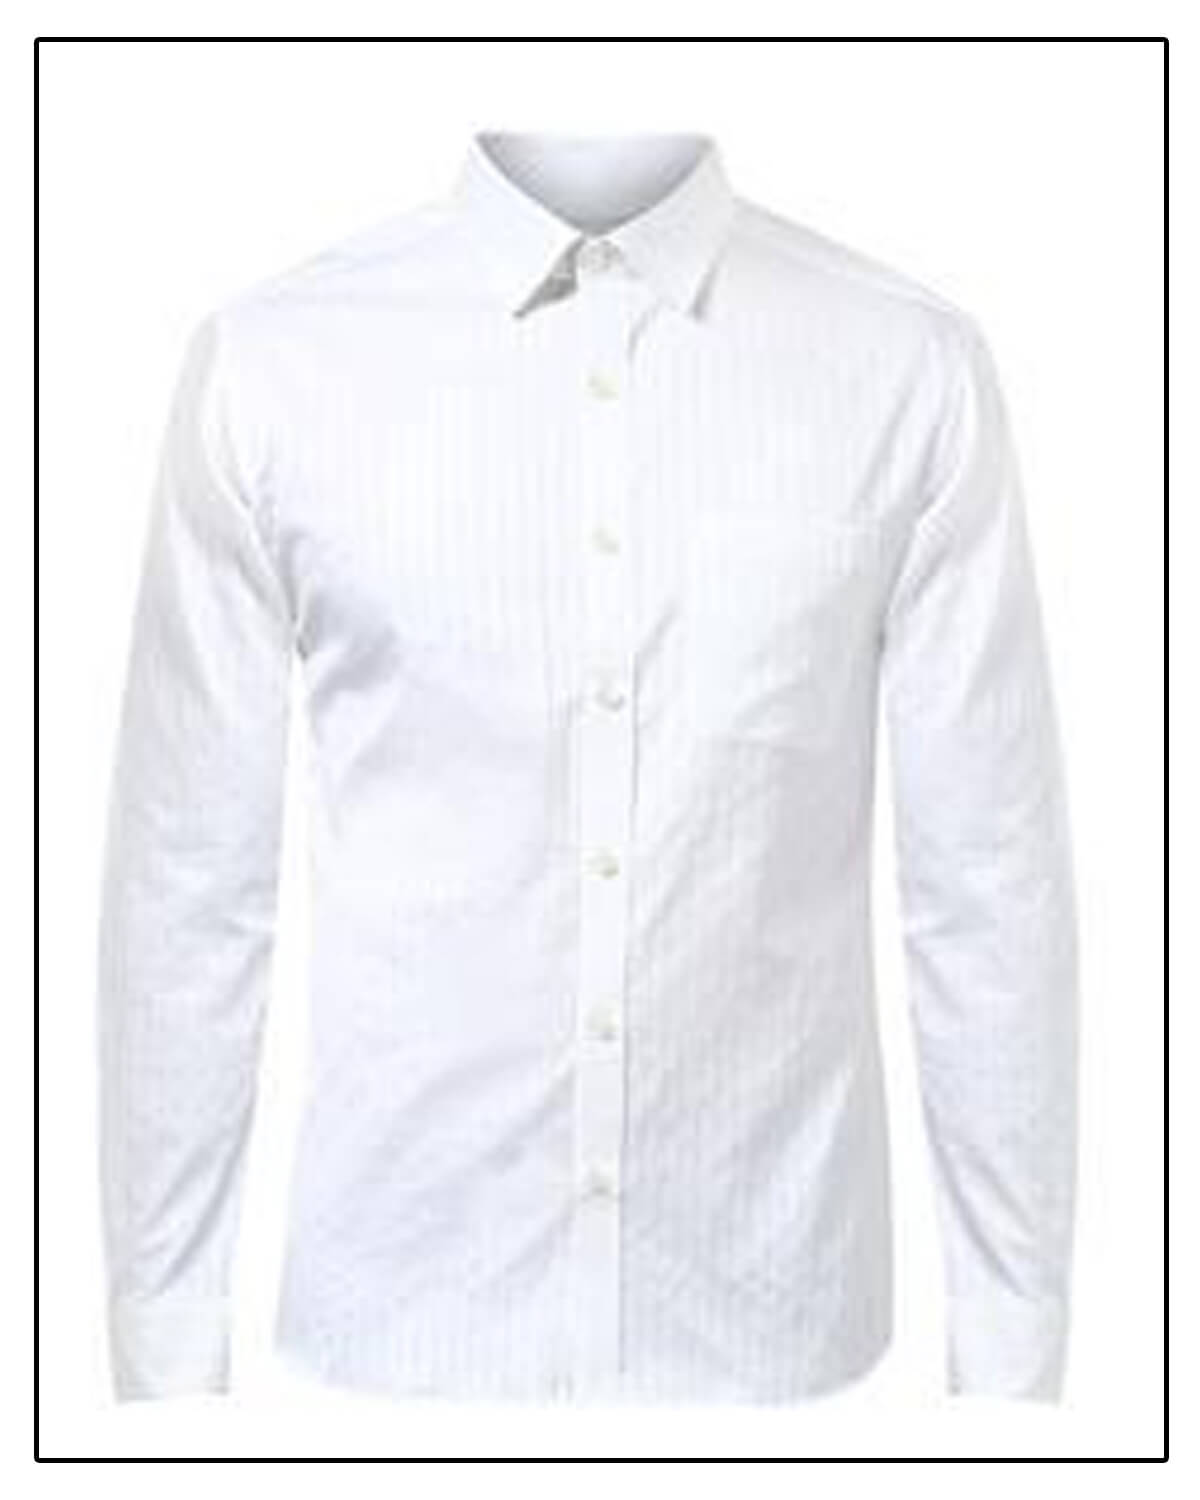 White formal Shirt for Men | royal and ...